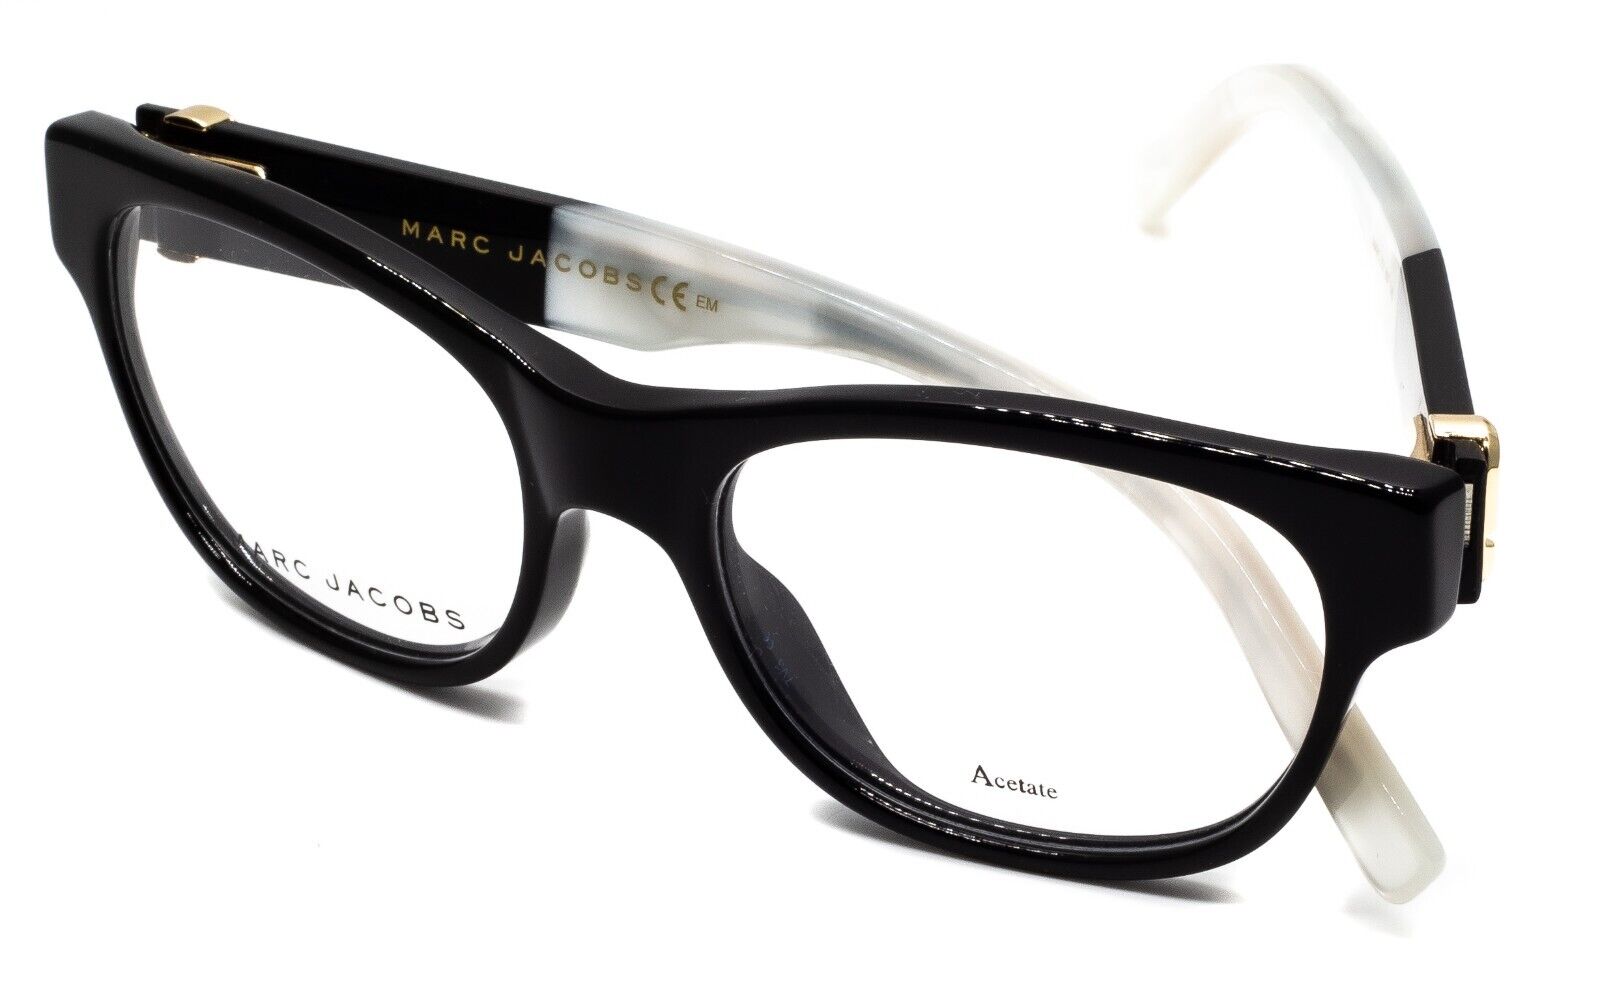 LOUIS MARCEL LMC207 C1 53mm Eyewear FRAMES RX Optical Eyeglasses Glasses -  New - GGV Eyewear